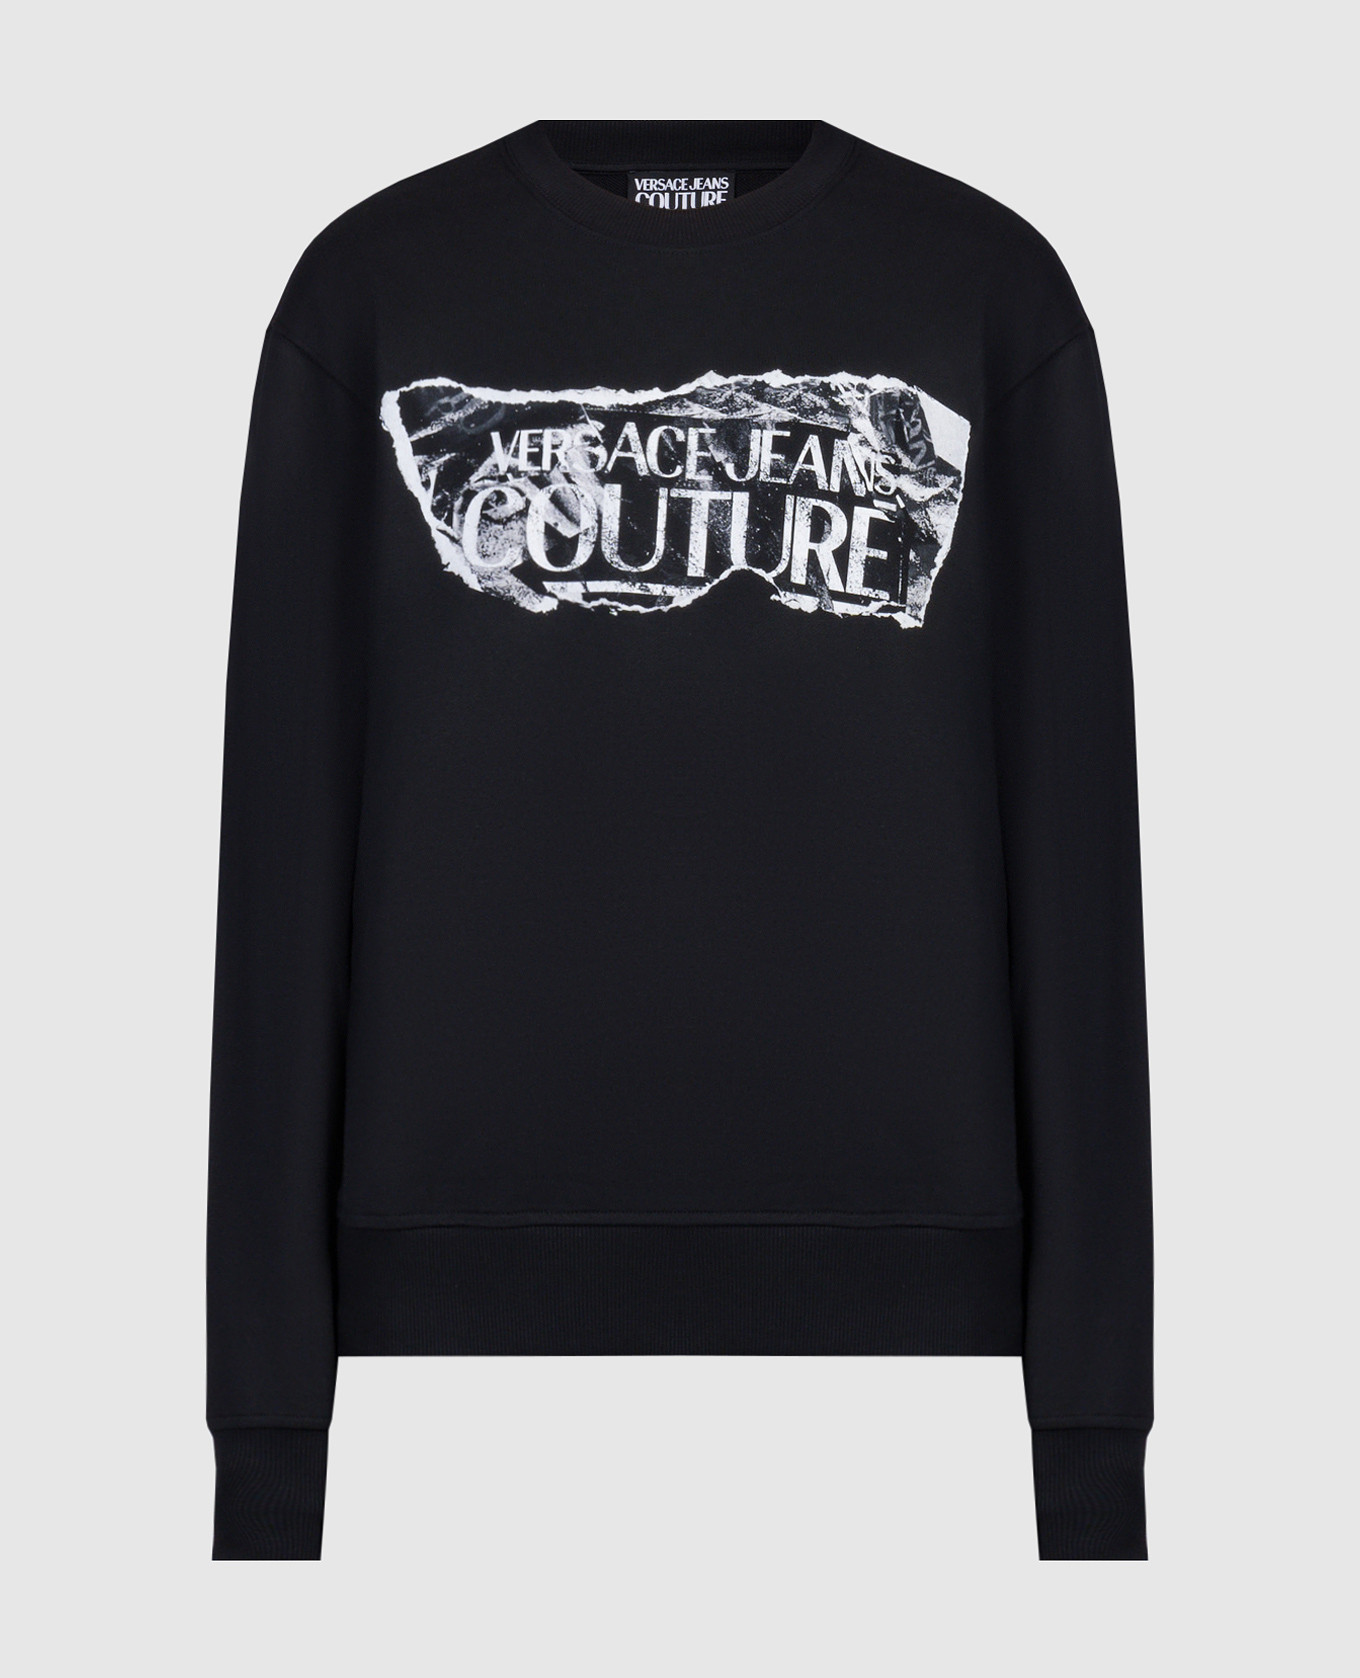 Black sweatshirt with logo print